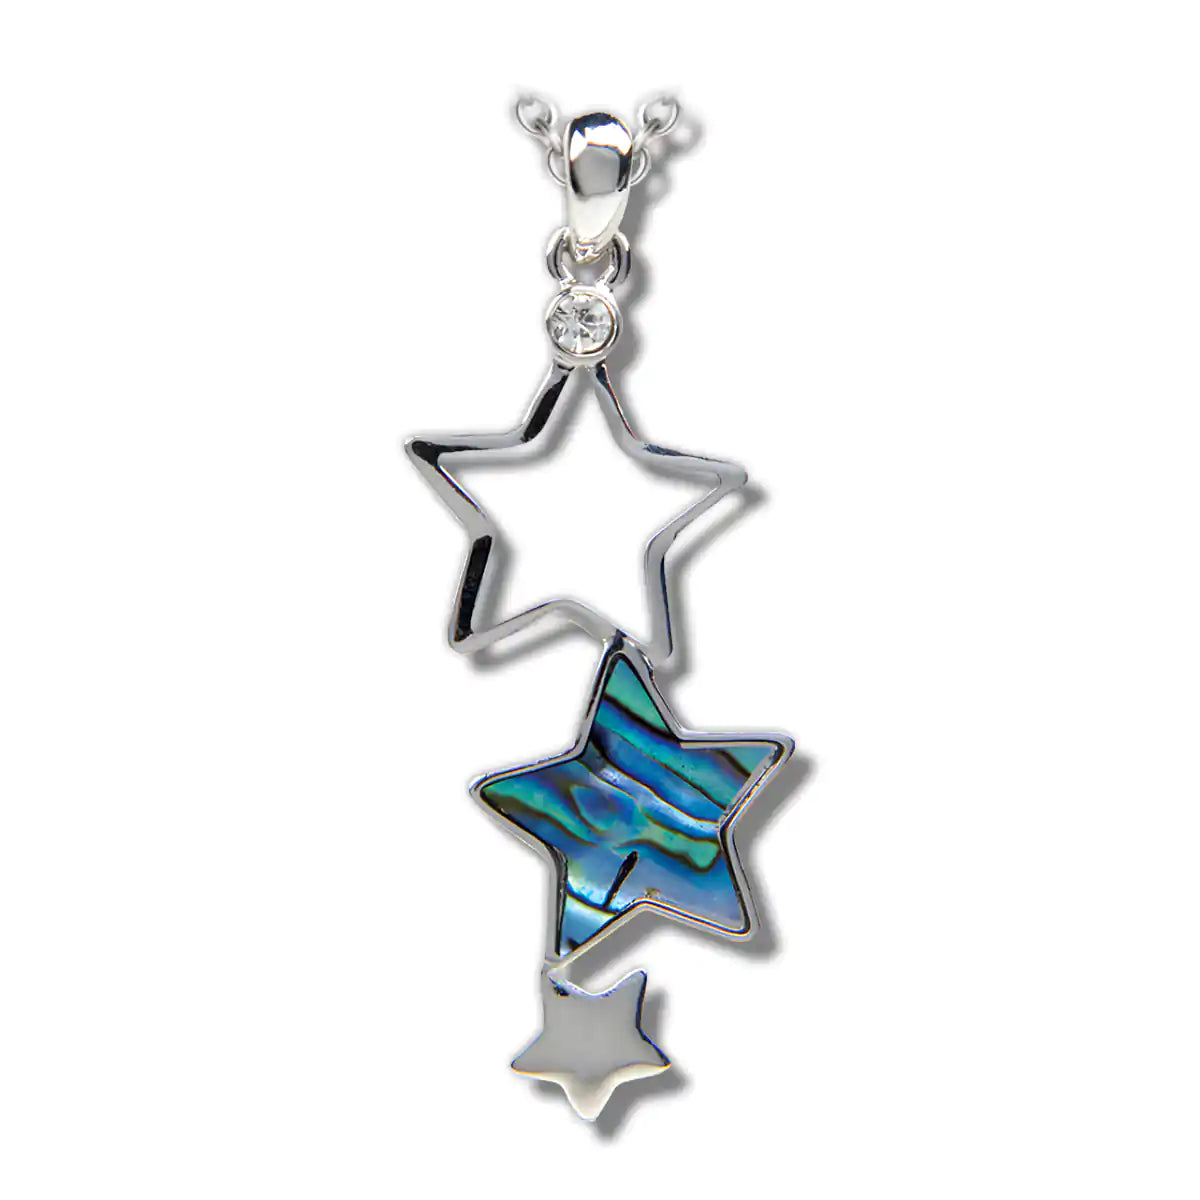 Glacier pearle stars necklace